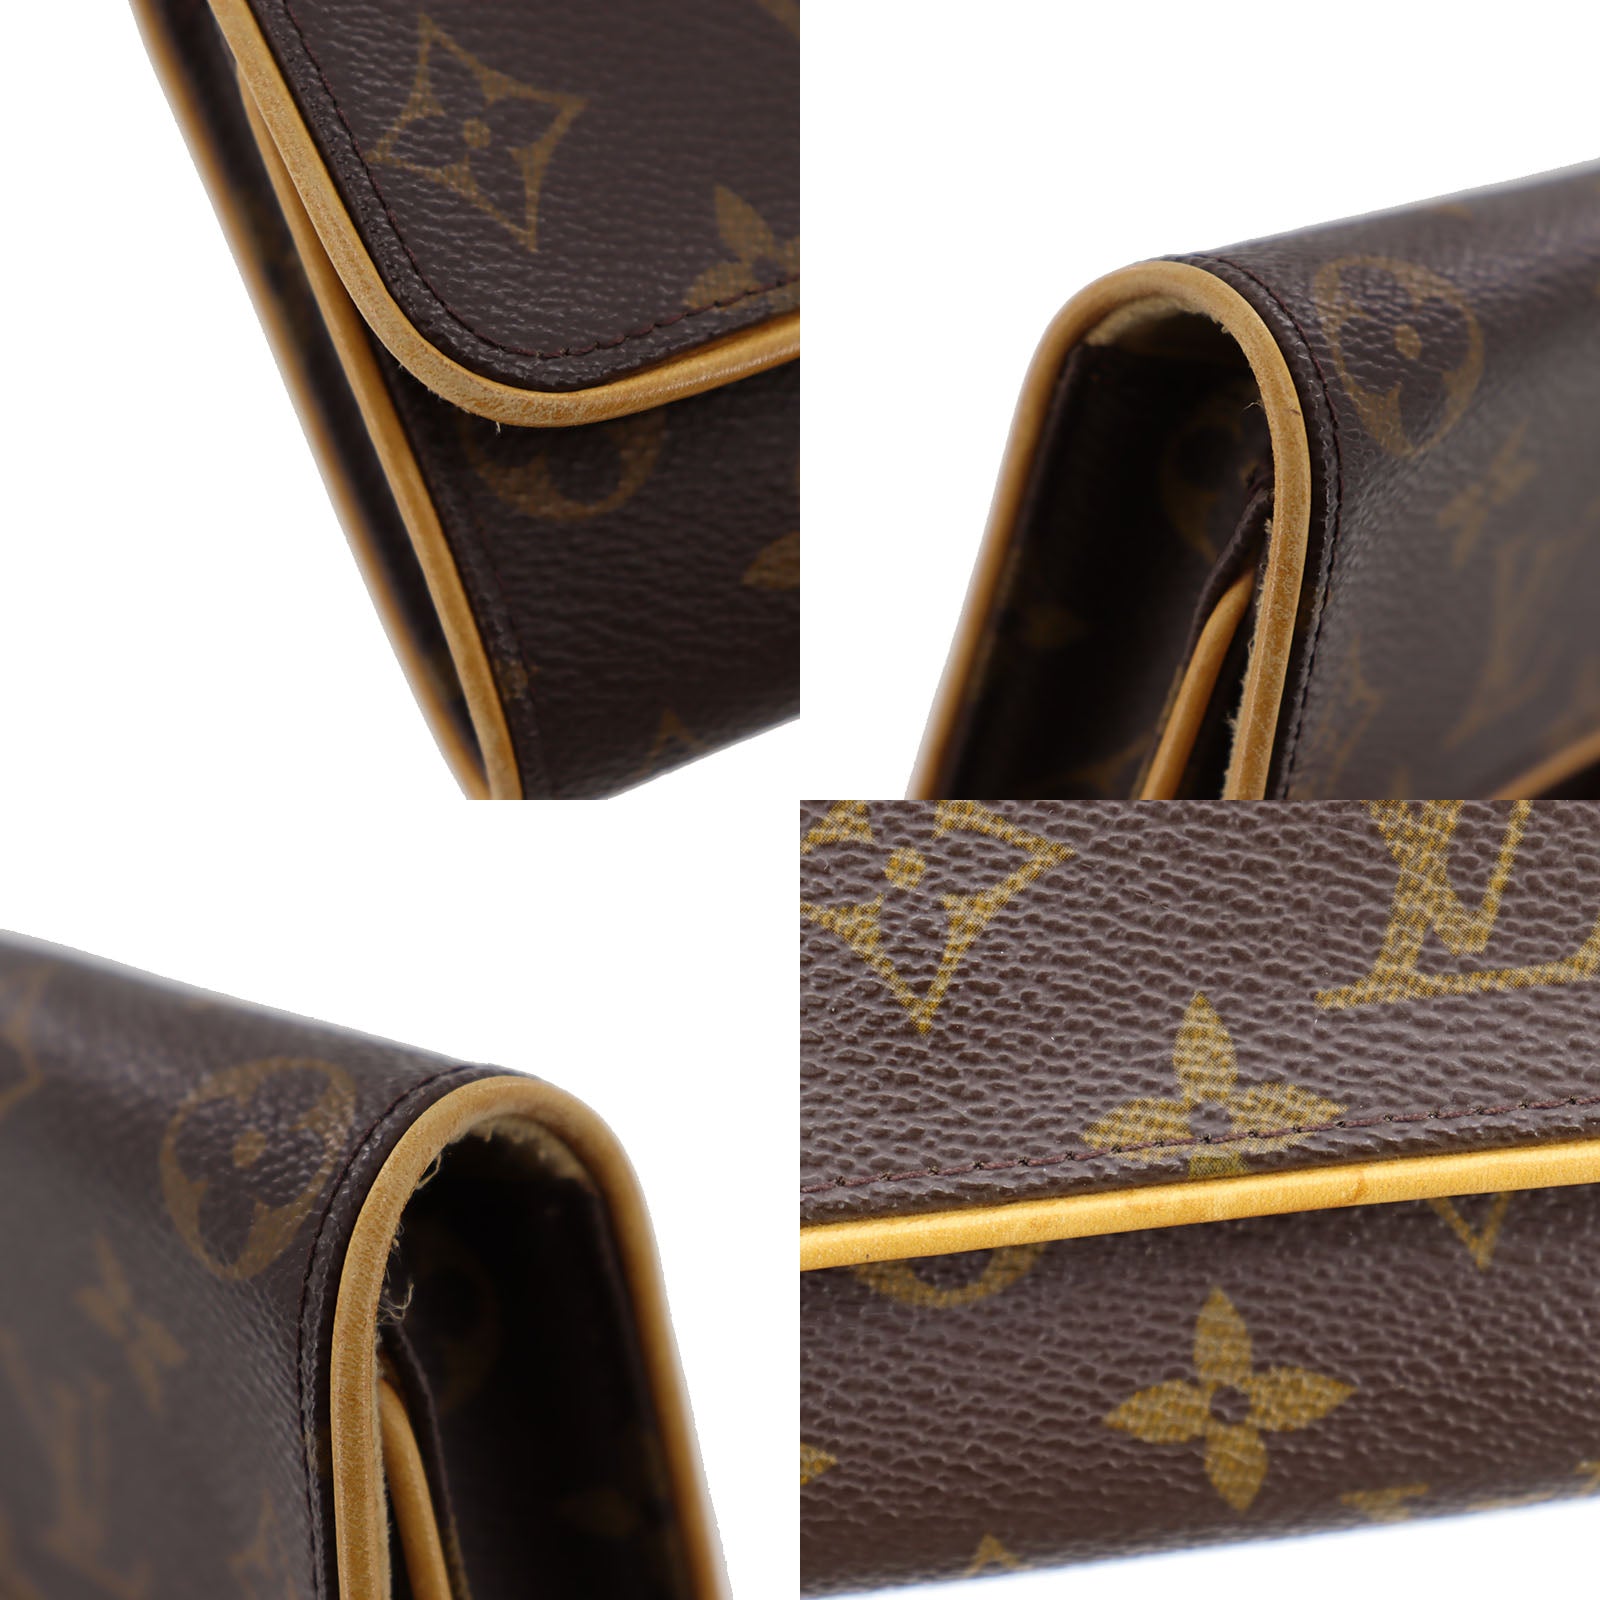 Louis Vuitton Monogram Pochette Twin PM M51854 Shoulder Bag Free Shipping  [Used]